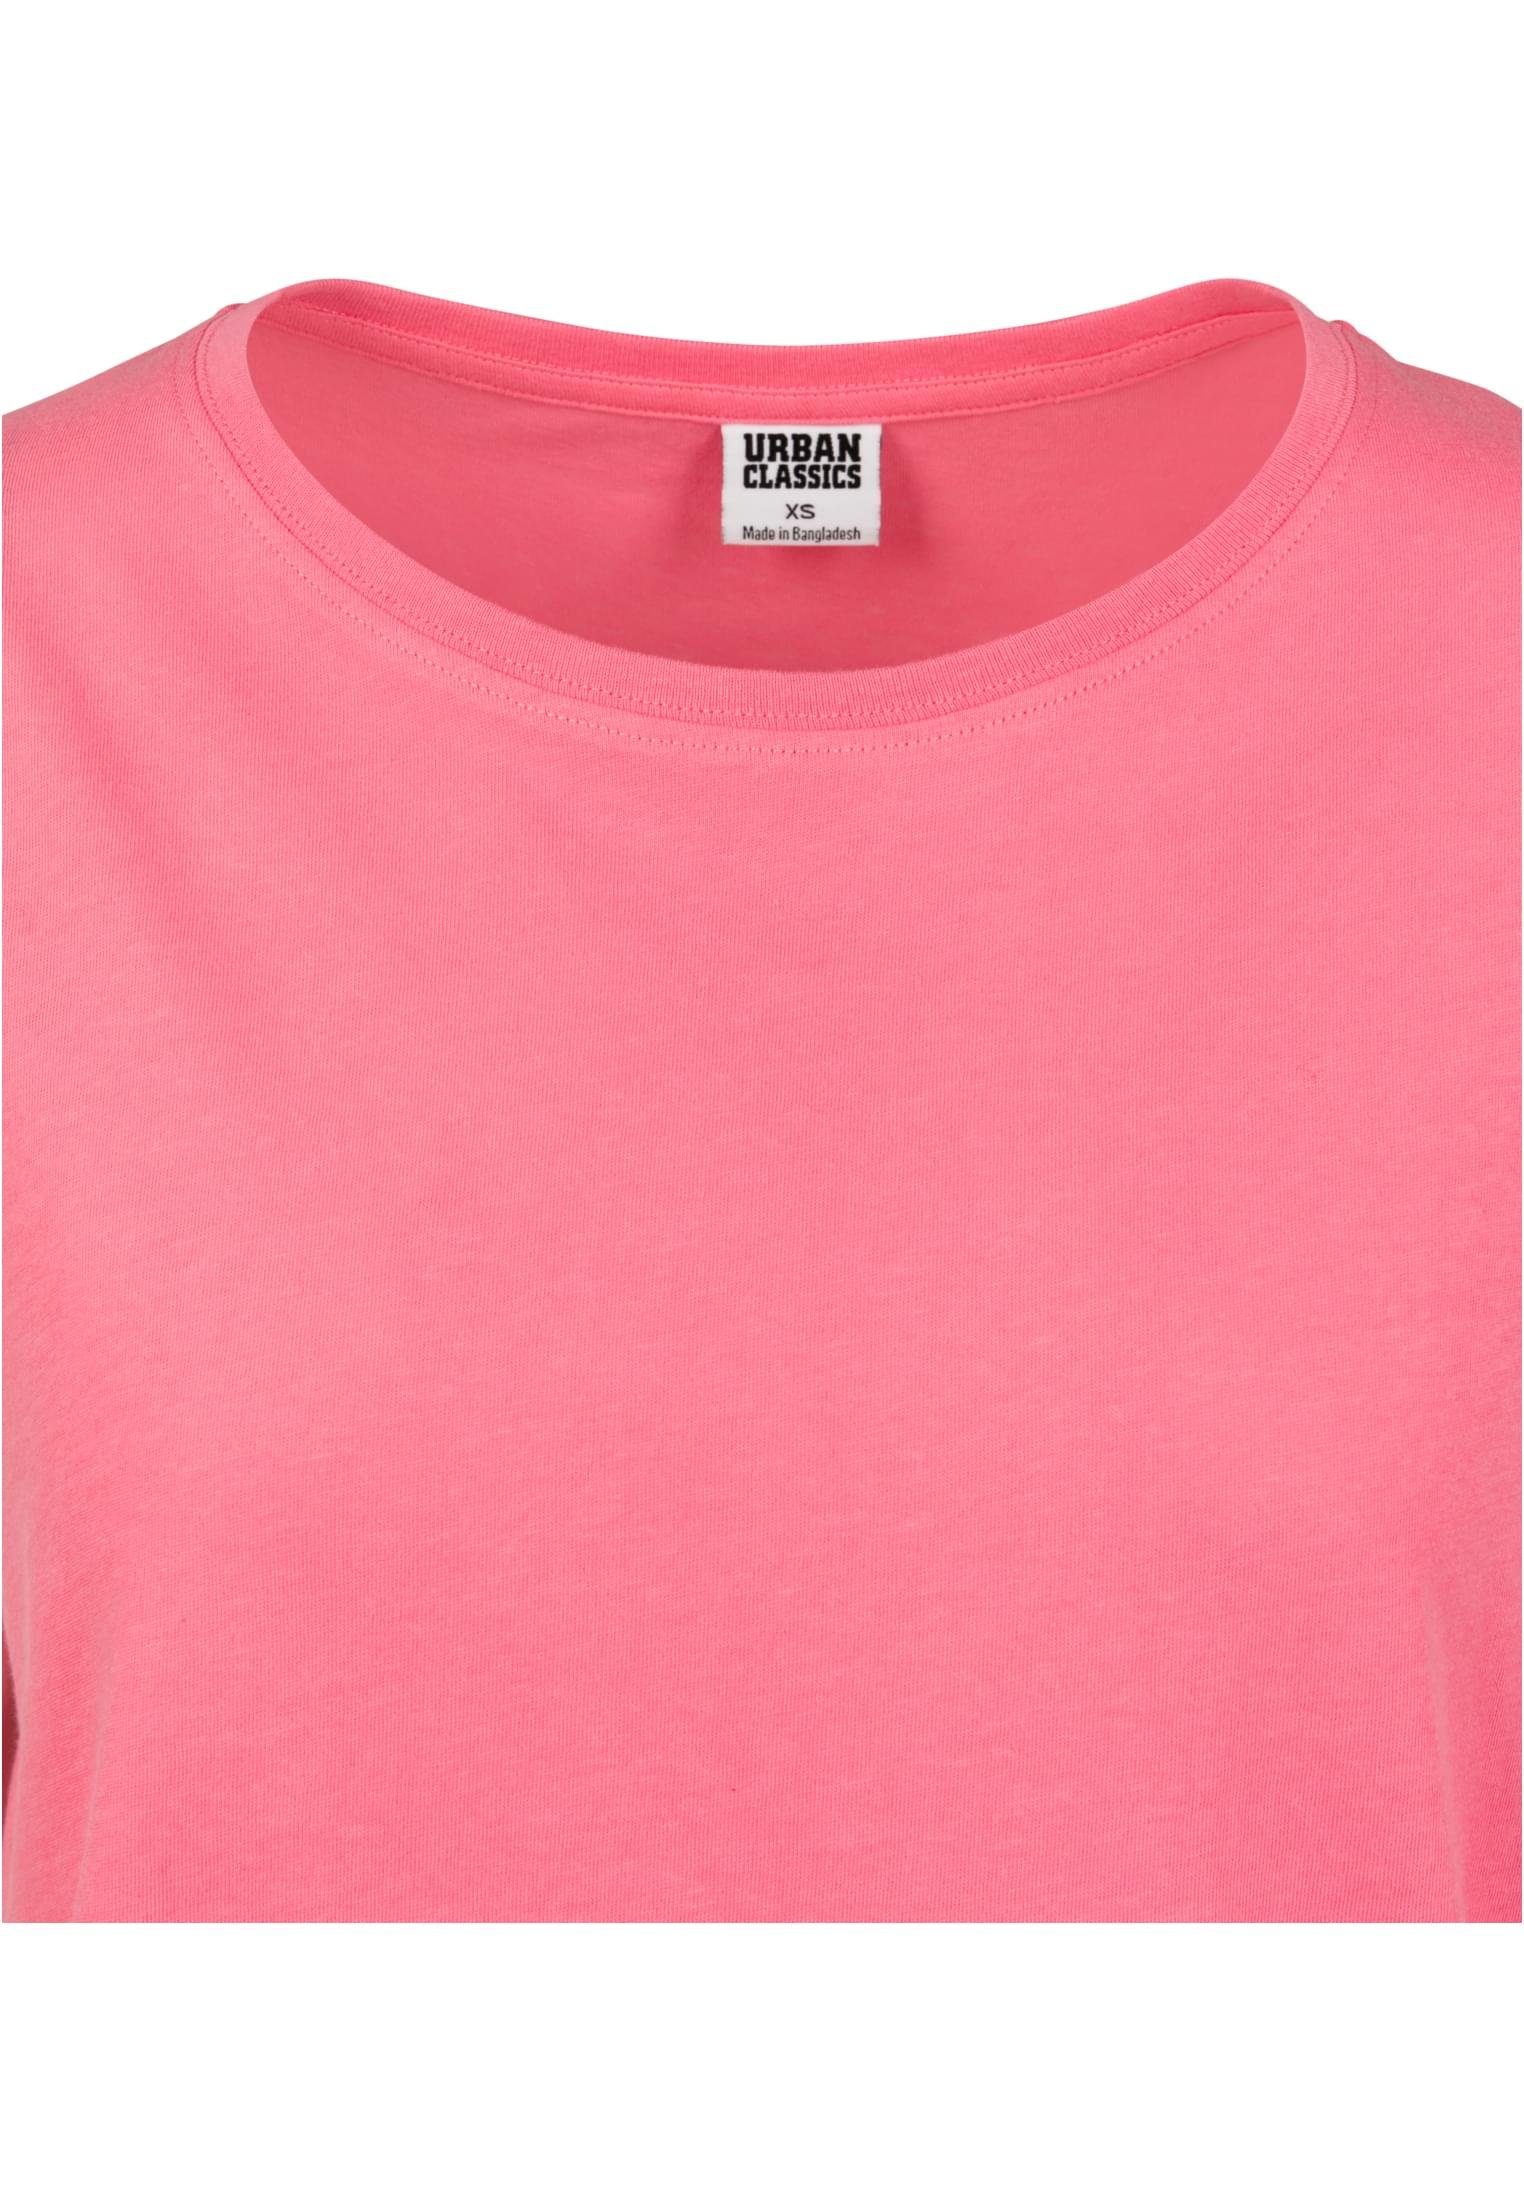 TB771 URBAN T-Shirt Shoulder Extended pinkgrapefruit CLASSICS